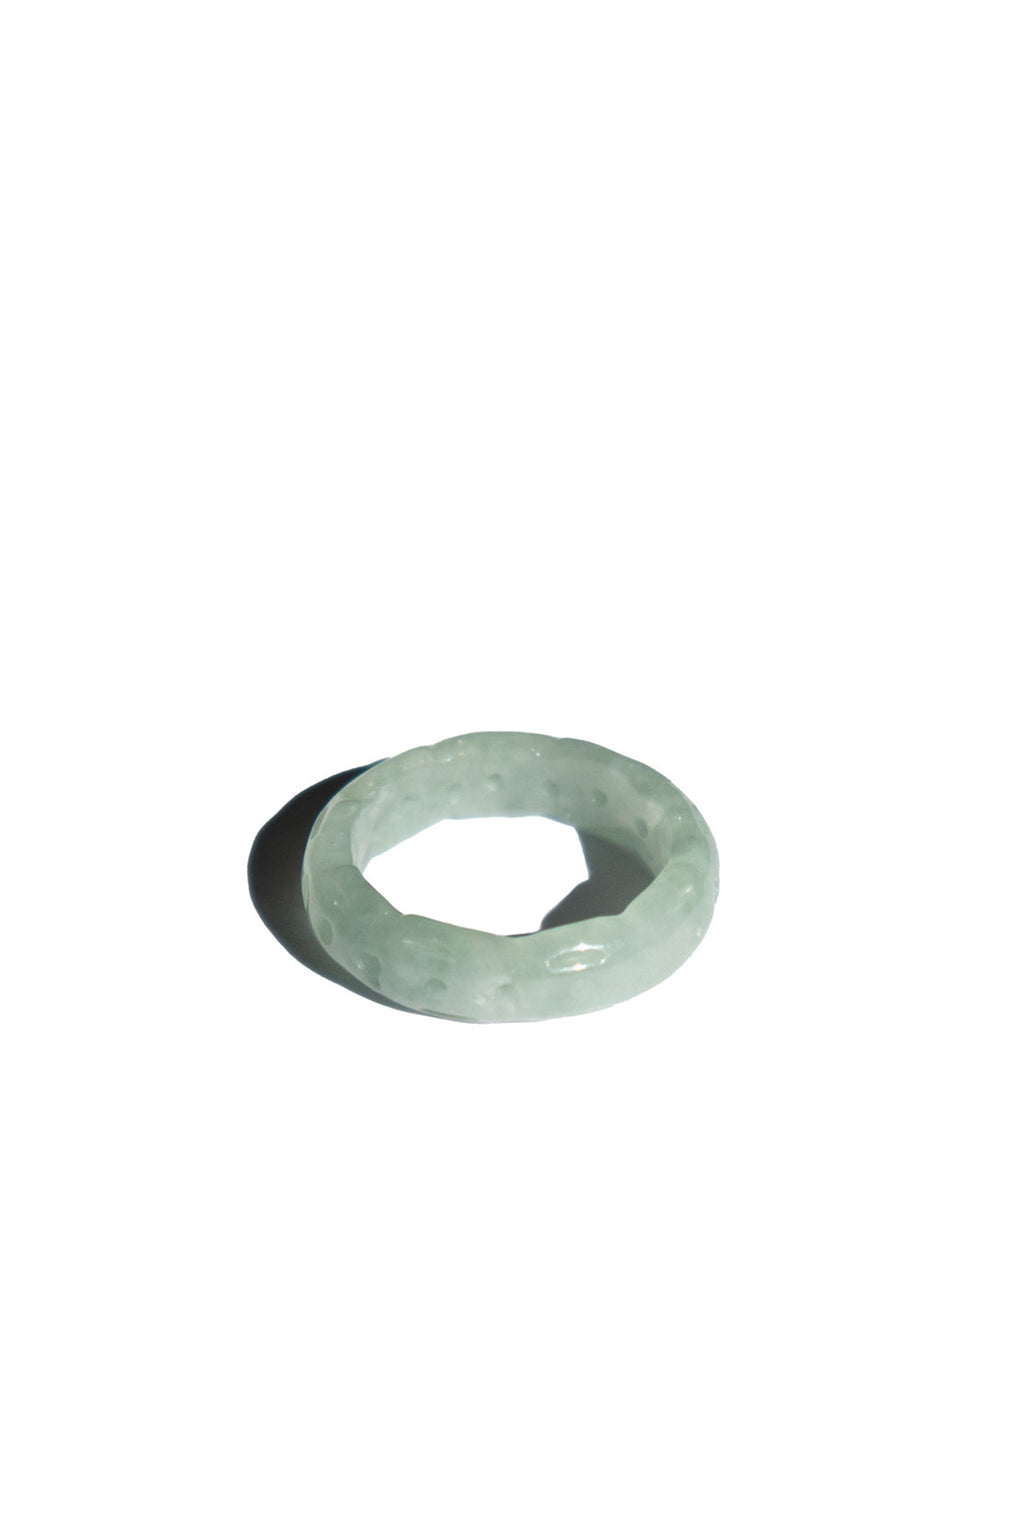 seree-weave-off-white-jadeite-ringseree-weave-off-white-jadeite-ring